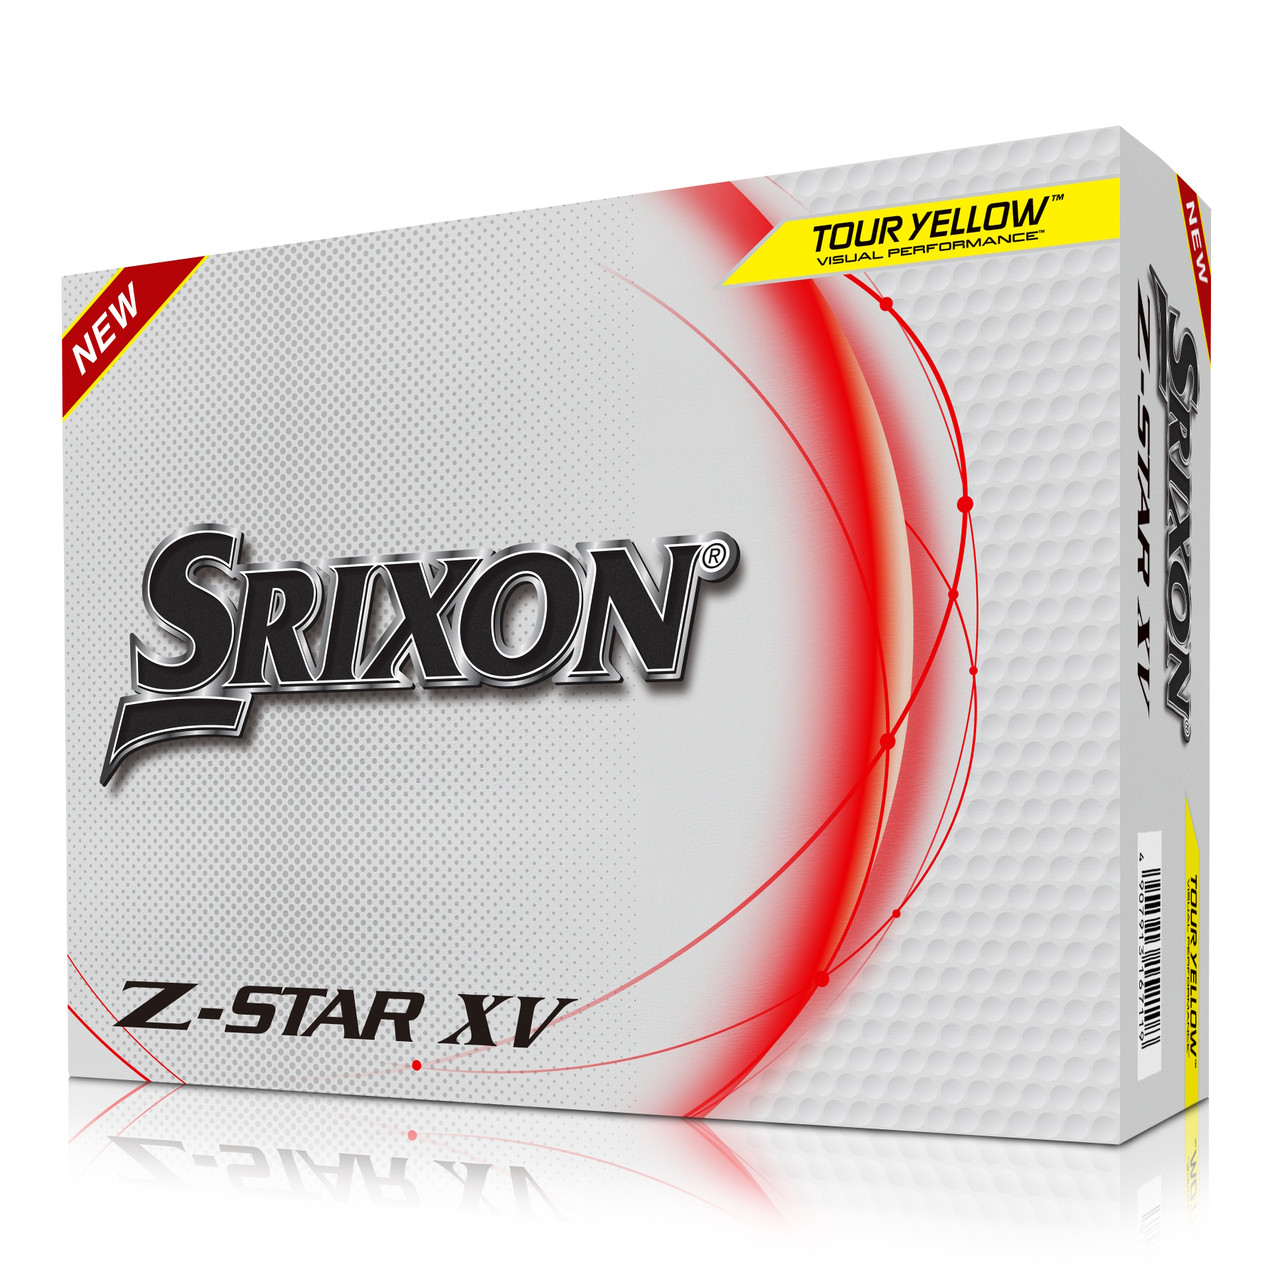 Srixon Z-Star XV Golf Balls, Tour Yellow (Buy 2, Get 1 Free)